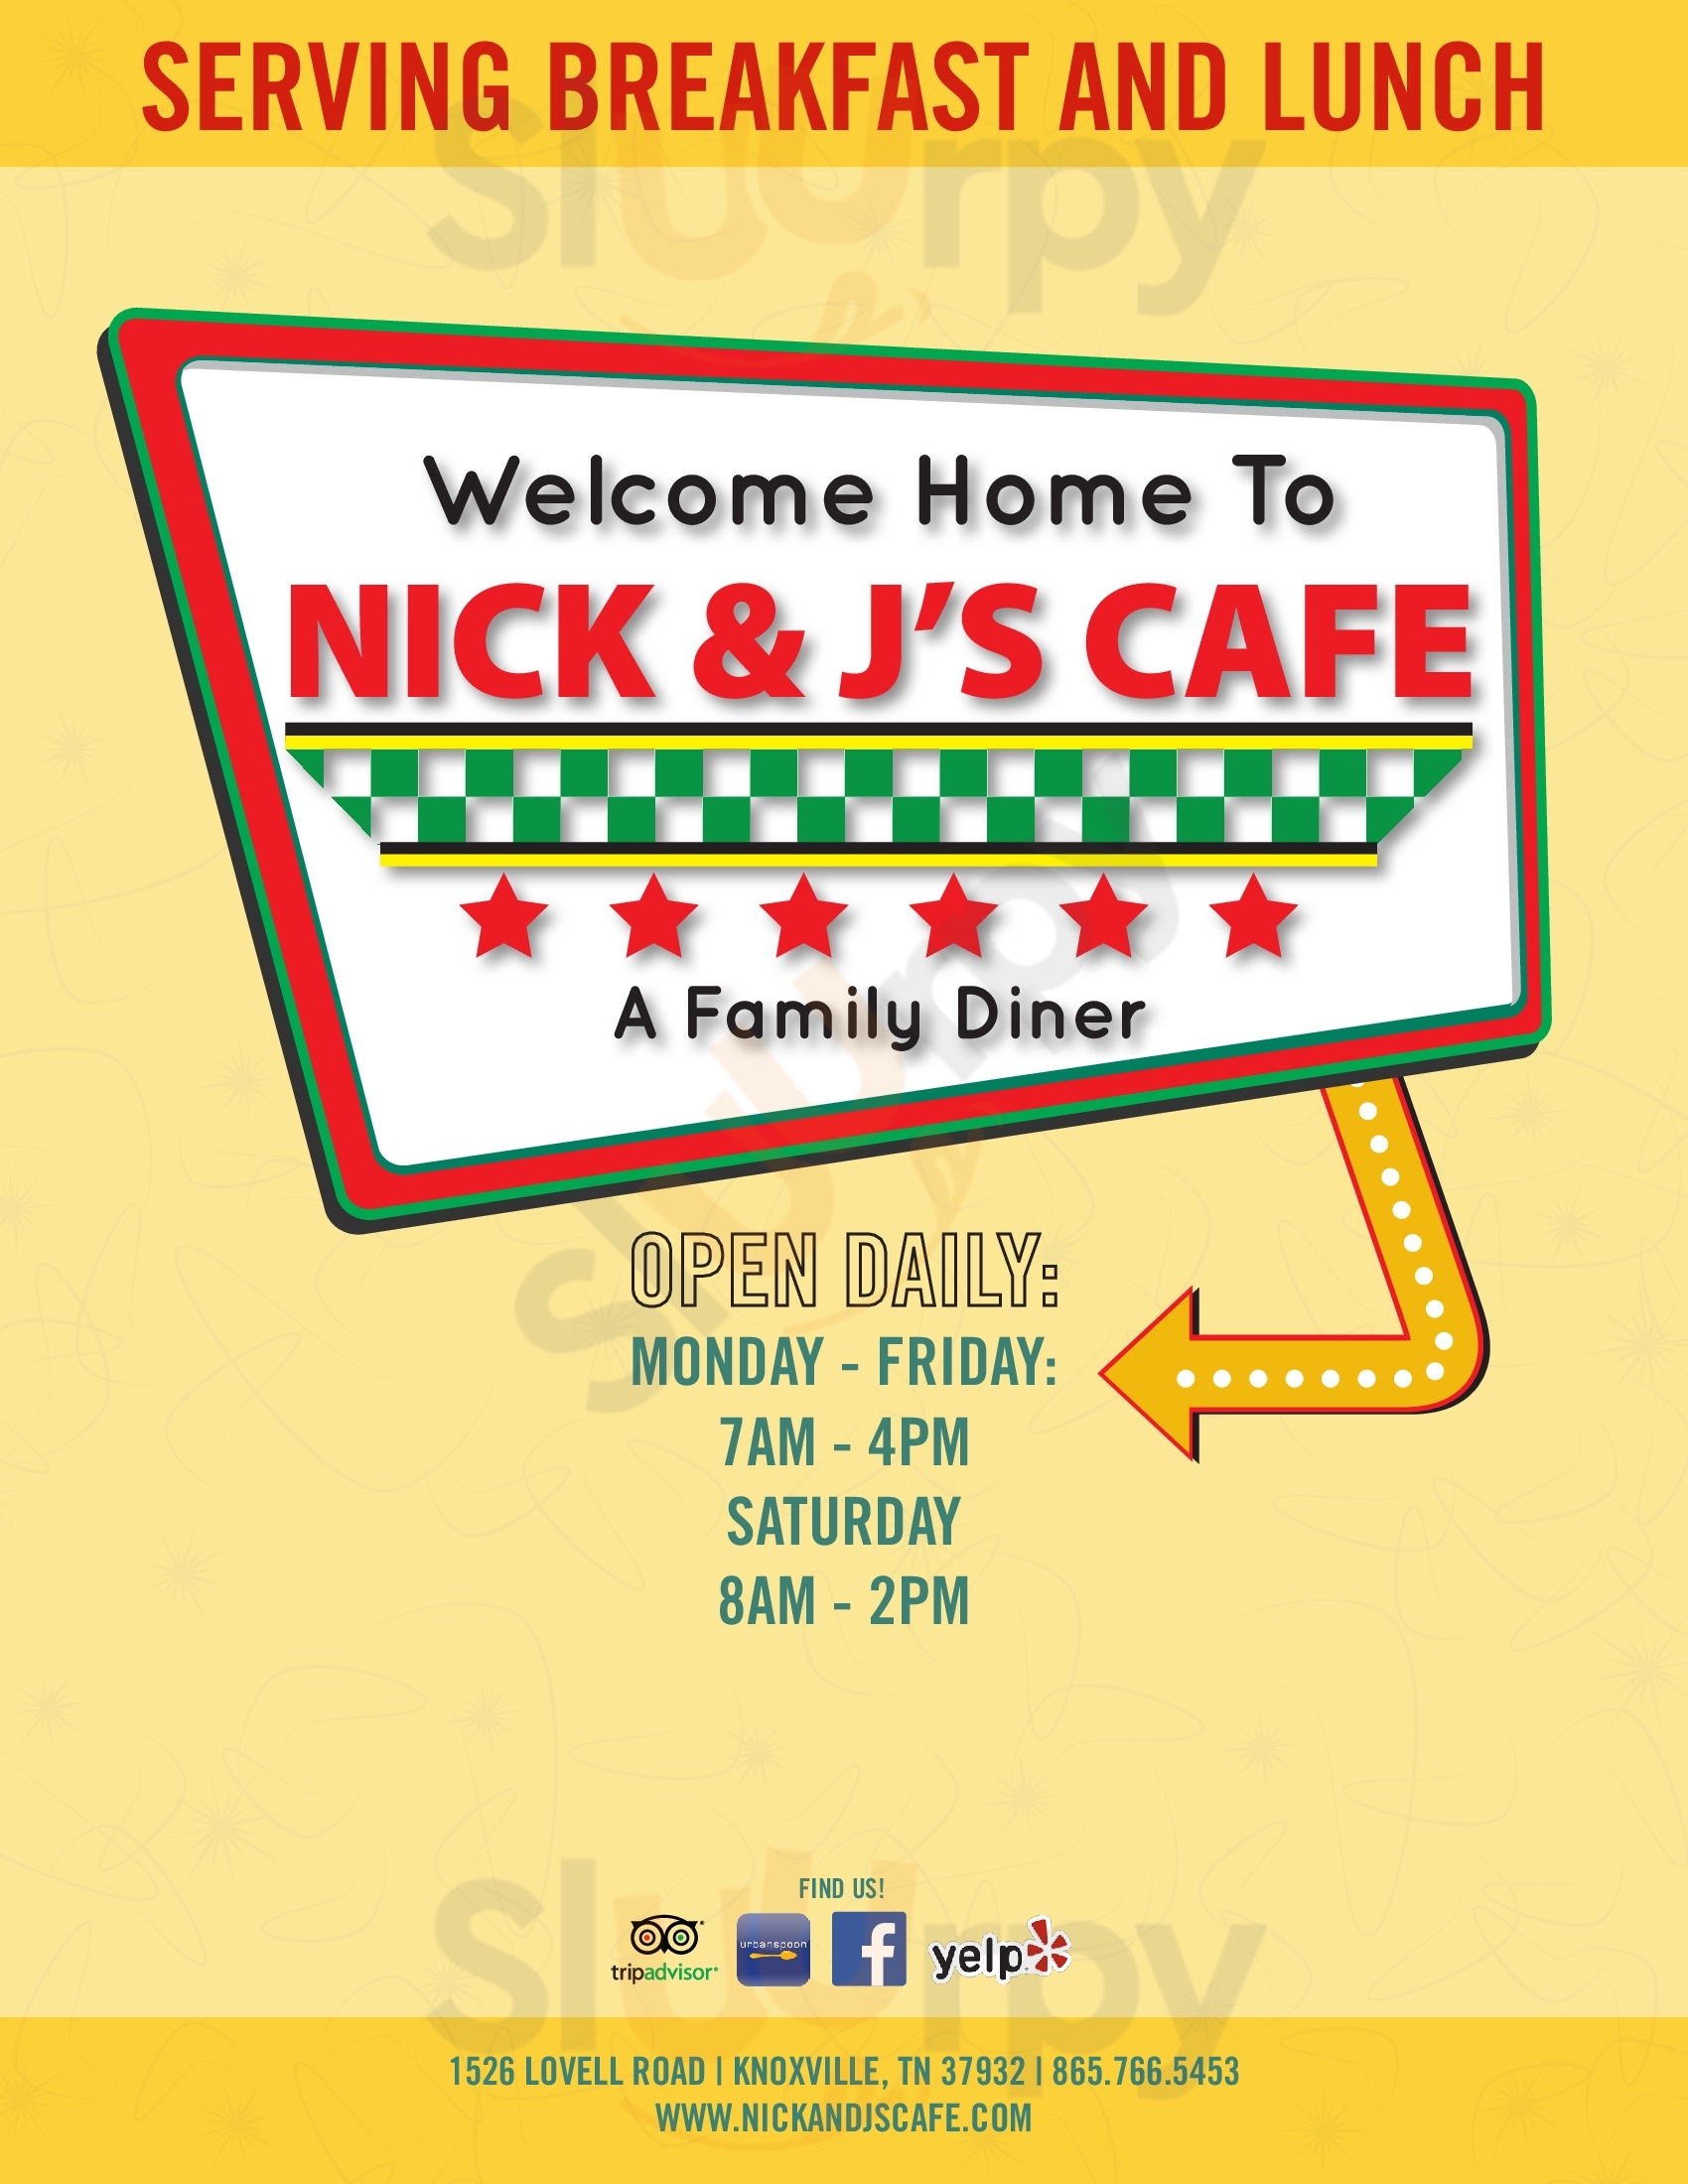 Nick & J's Cafe Knoxville Menu - 1